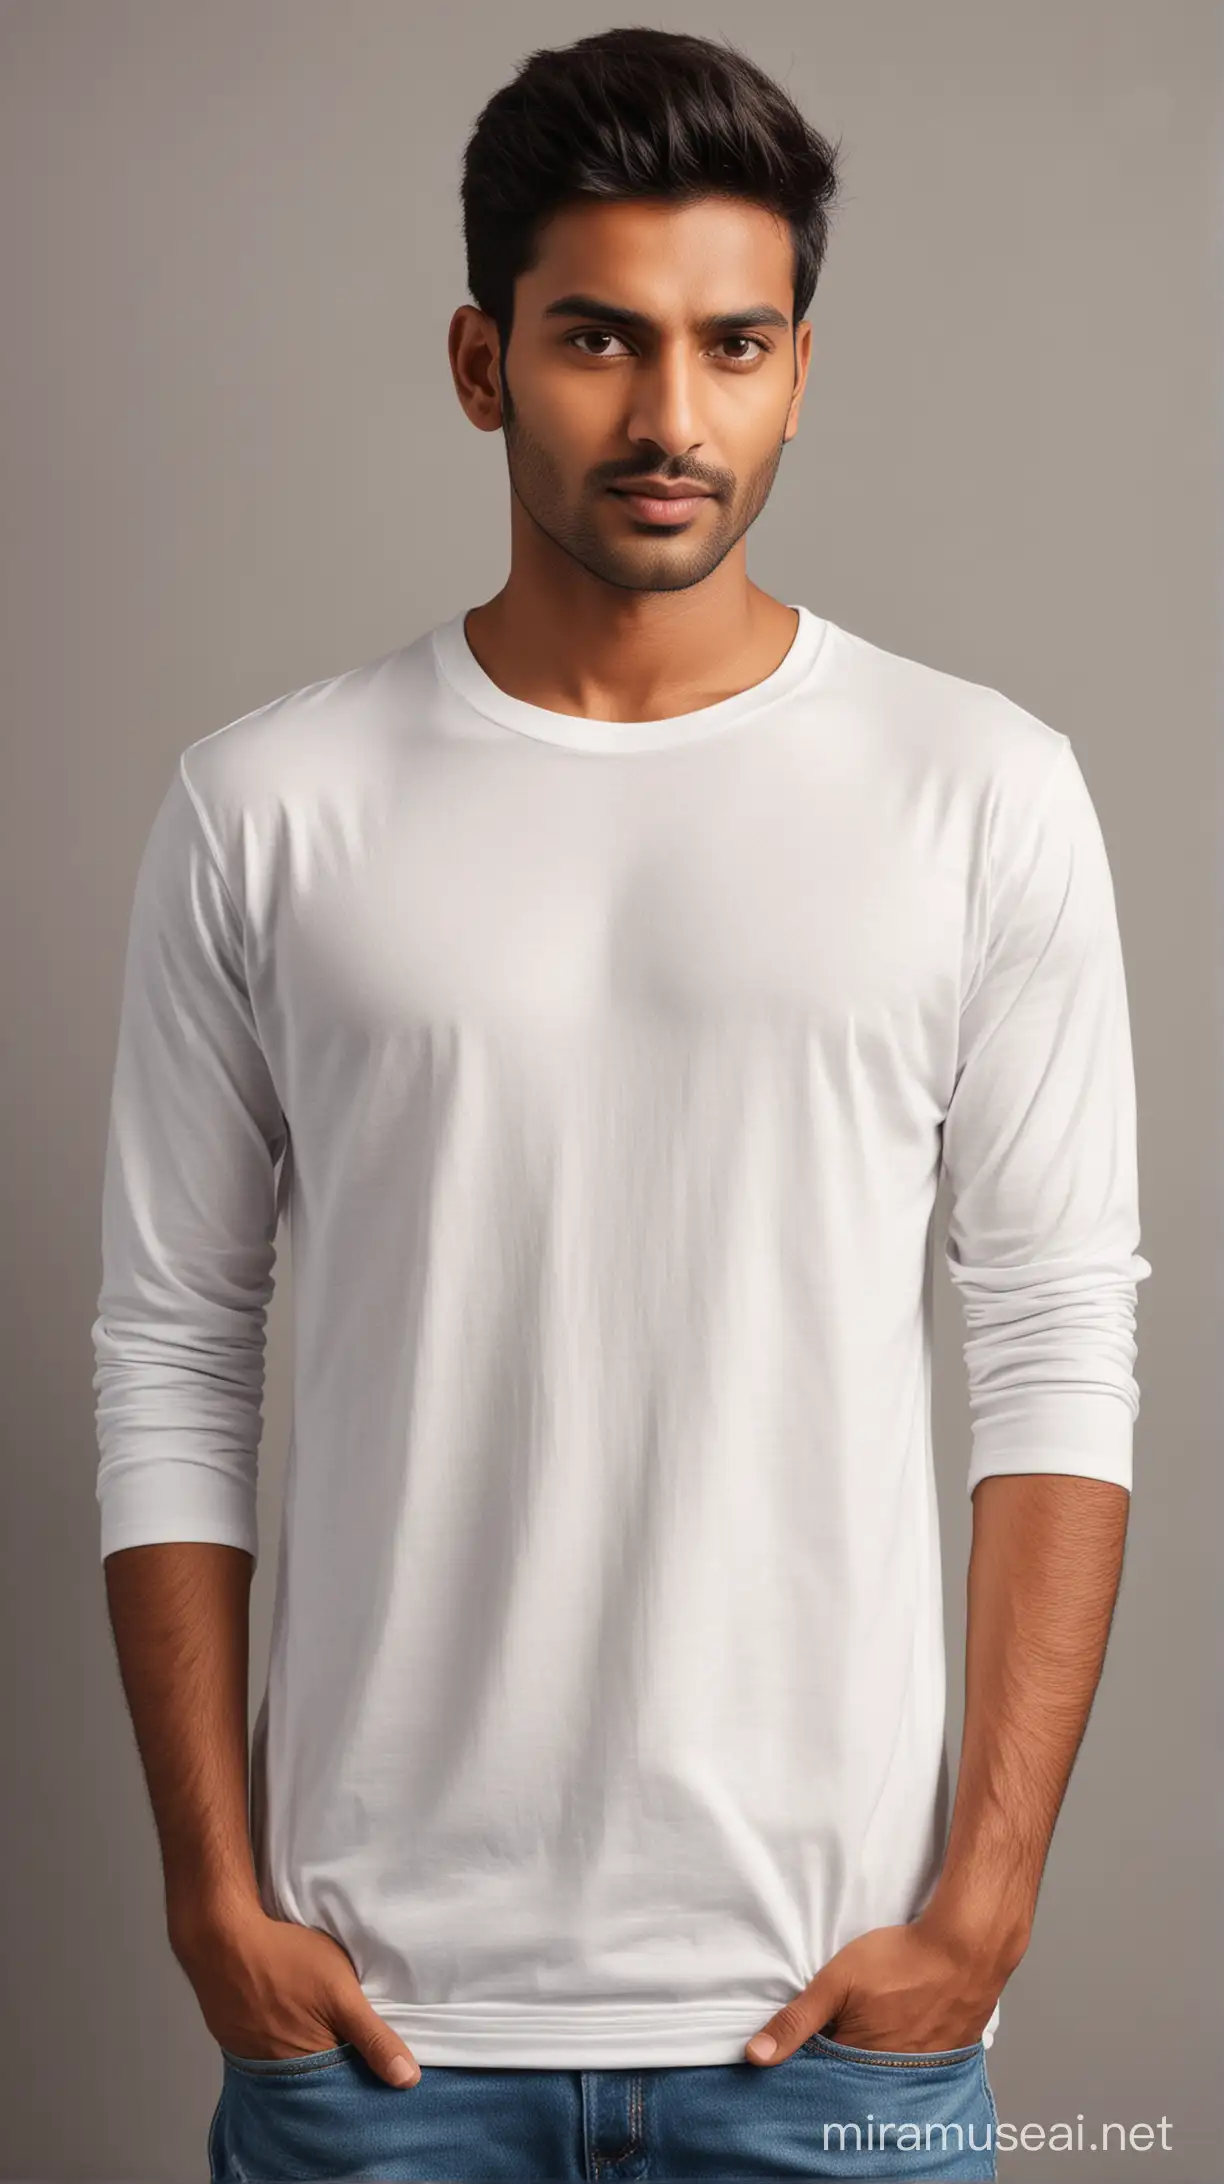 Indian Men Wearing Stylish TShirts Fashionable South Asian Male Apparel